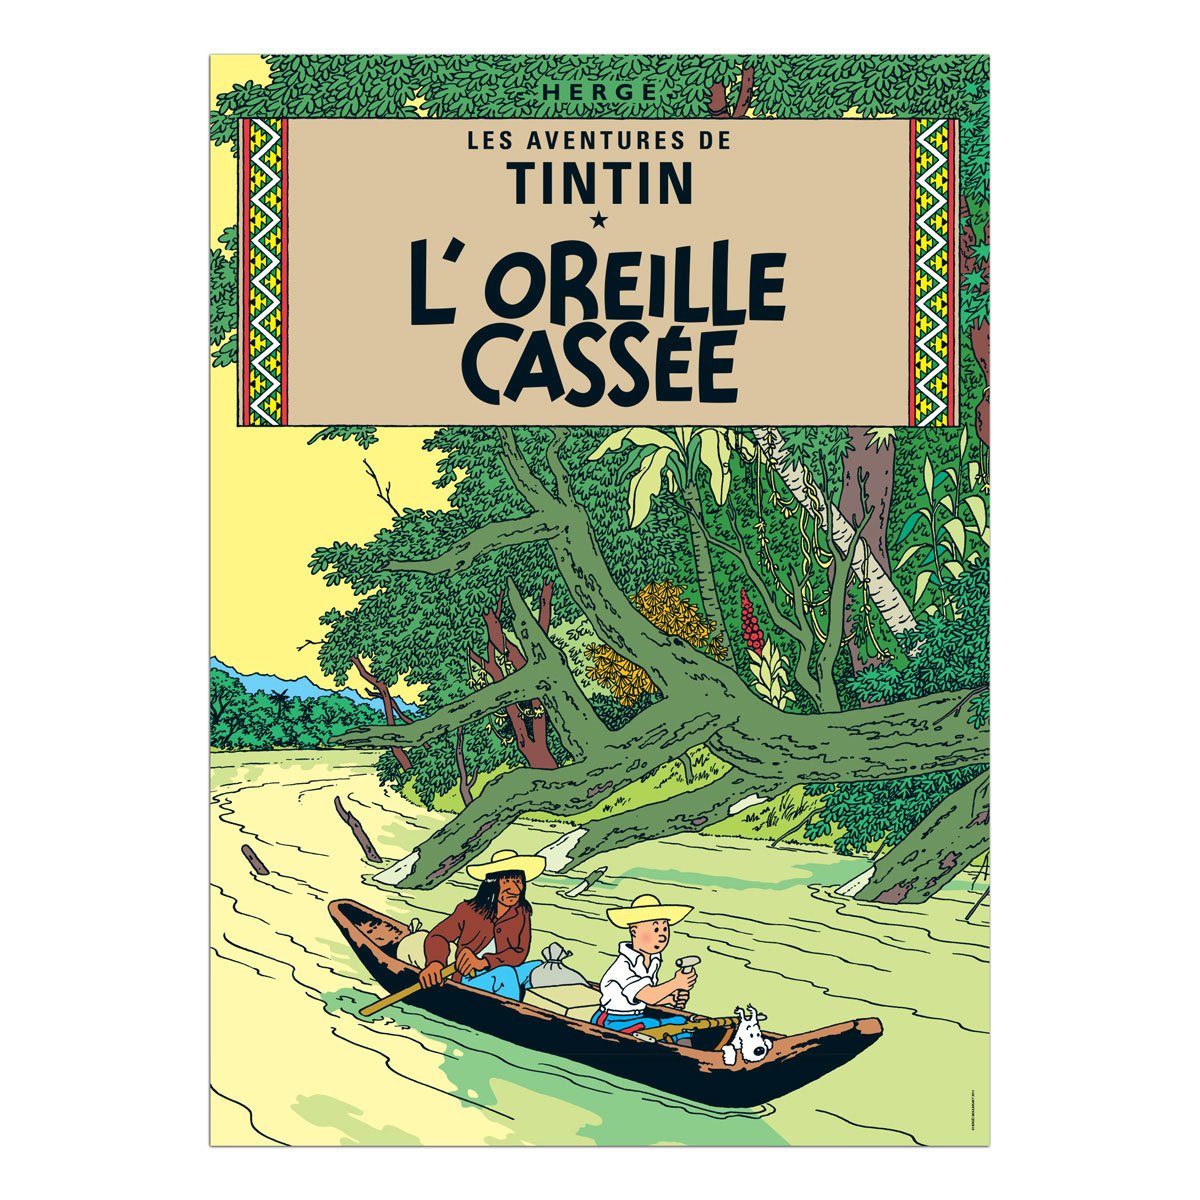 Tintin book postcards Ear